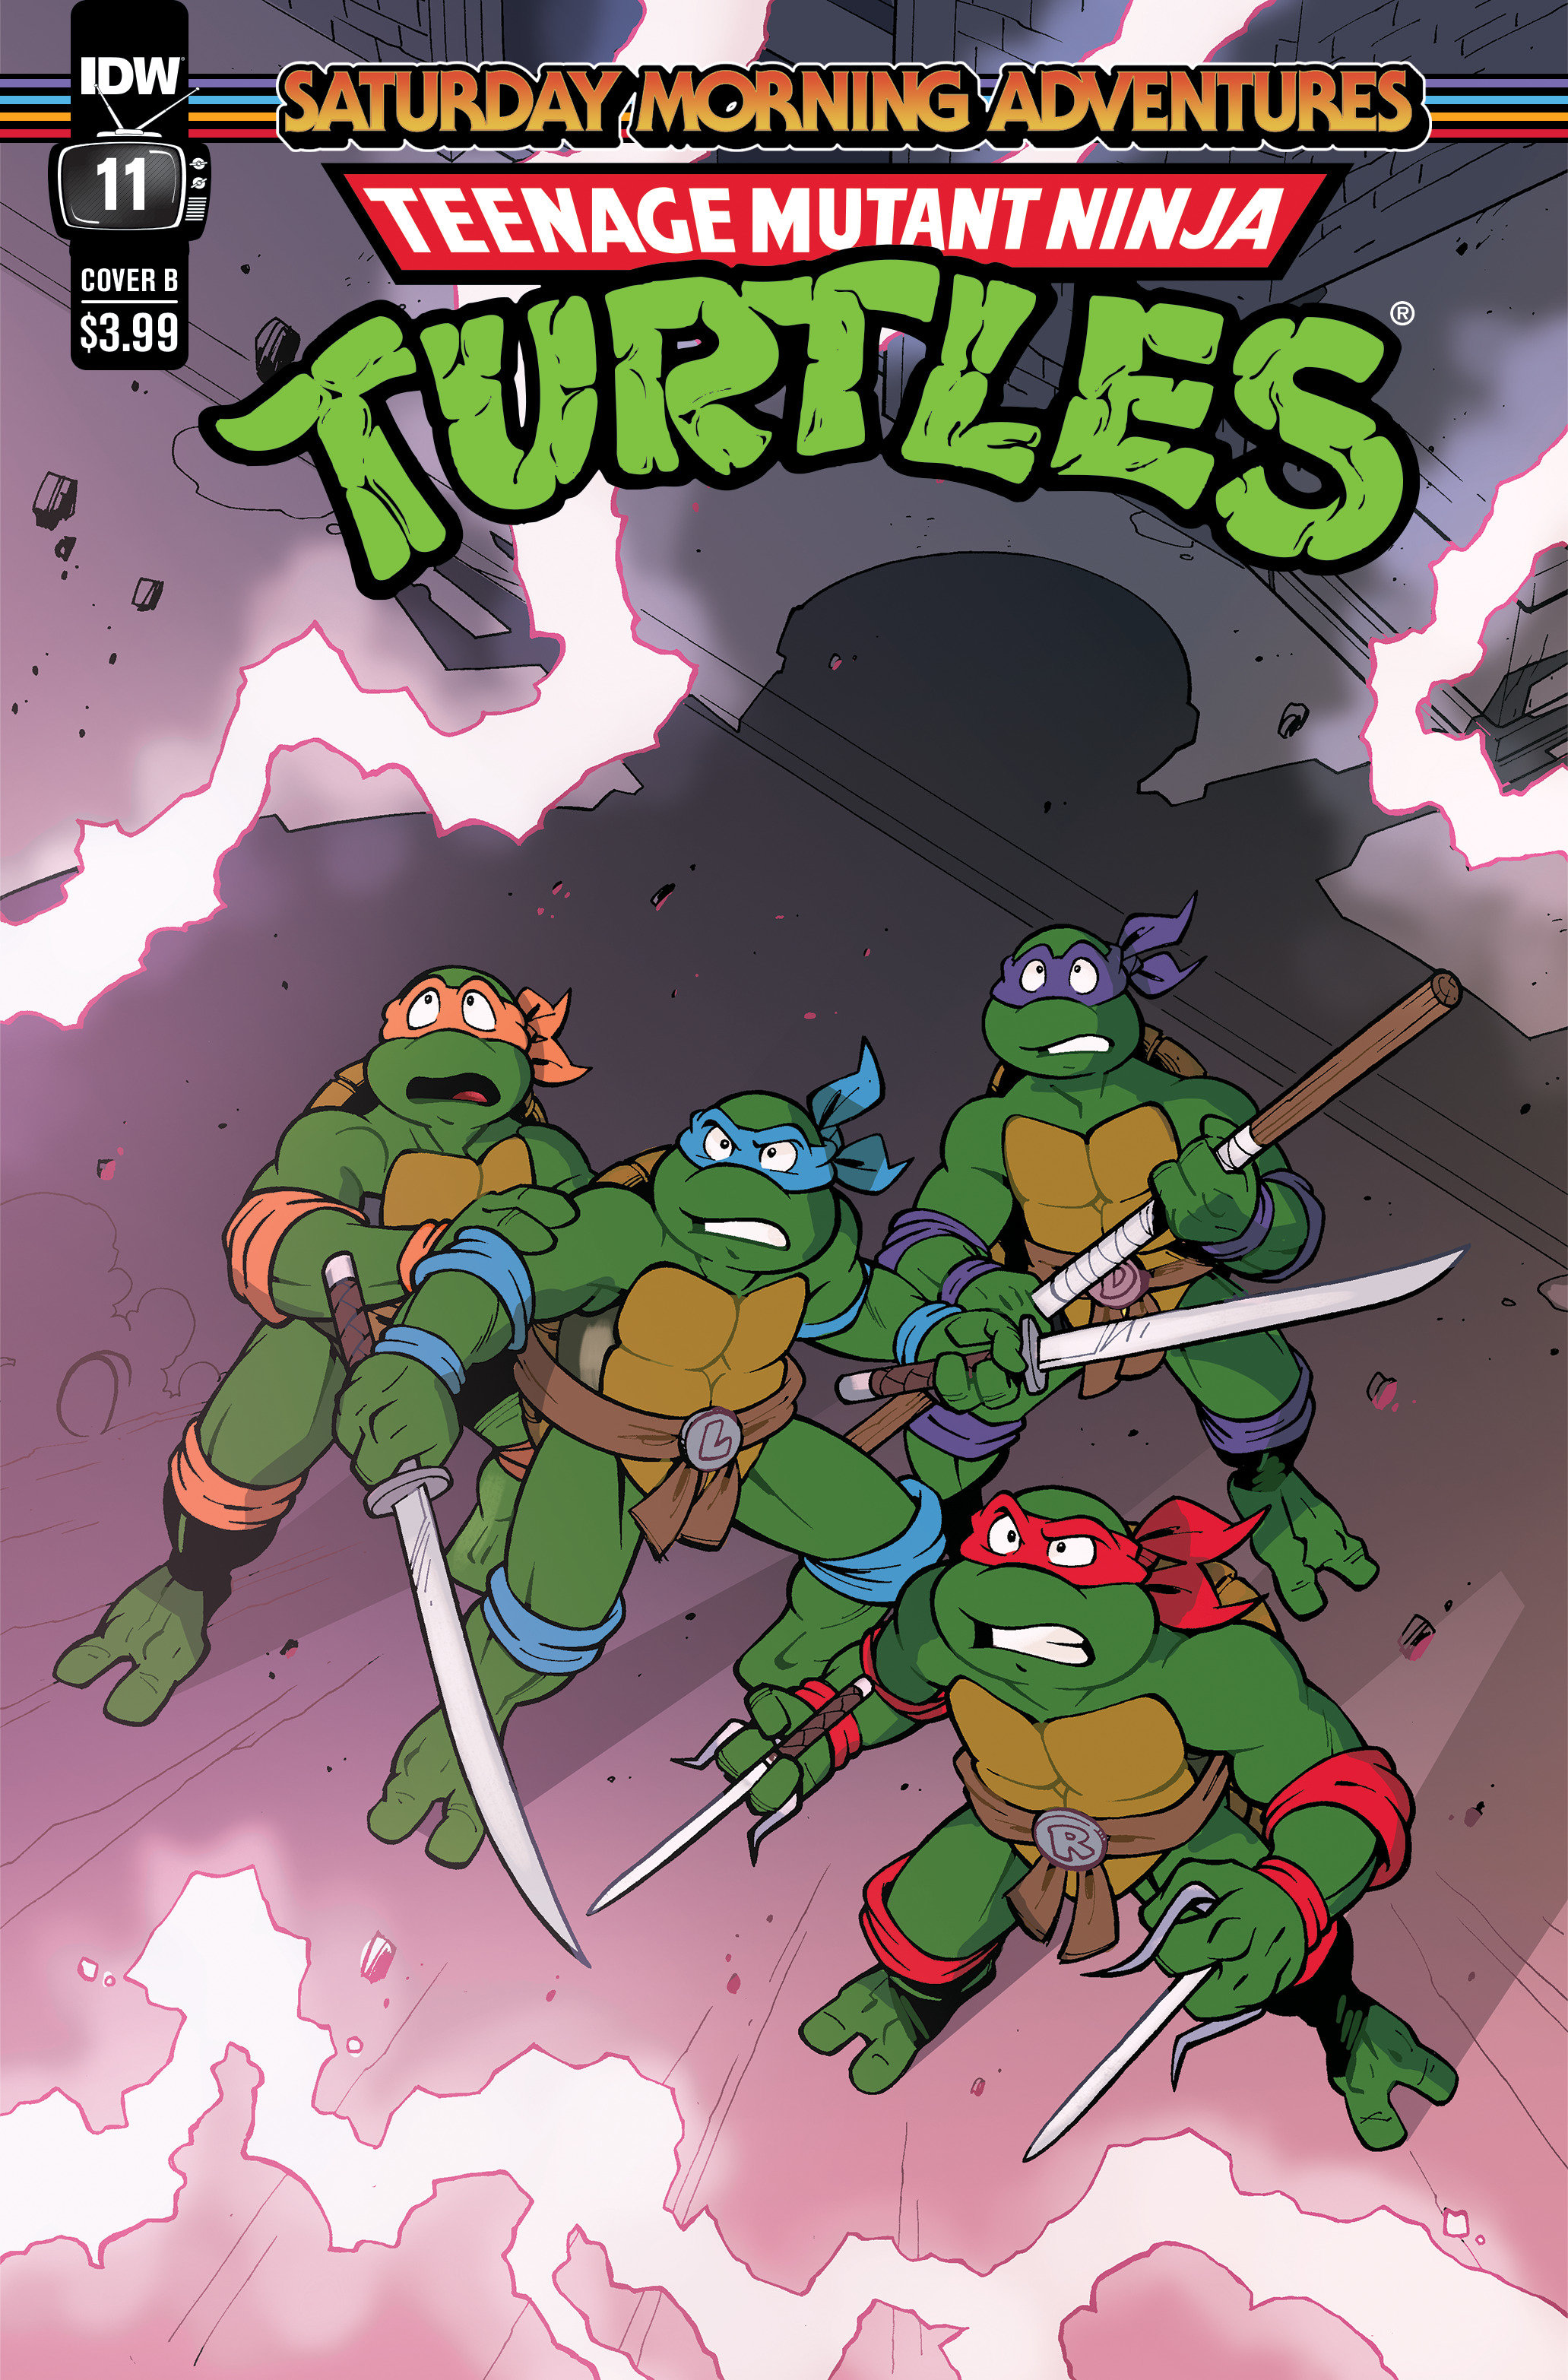 Teenage Mutant Ninja Turtles Saturday Morning Adventures Continued! #11 Cover B Lawrence